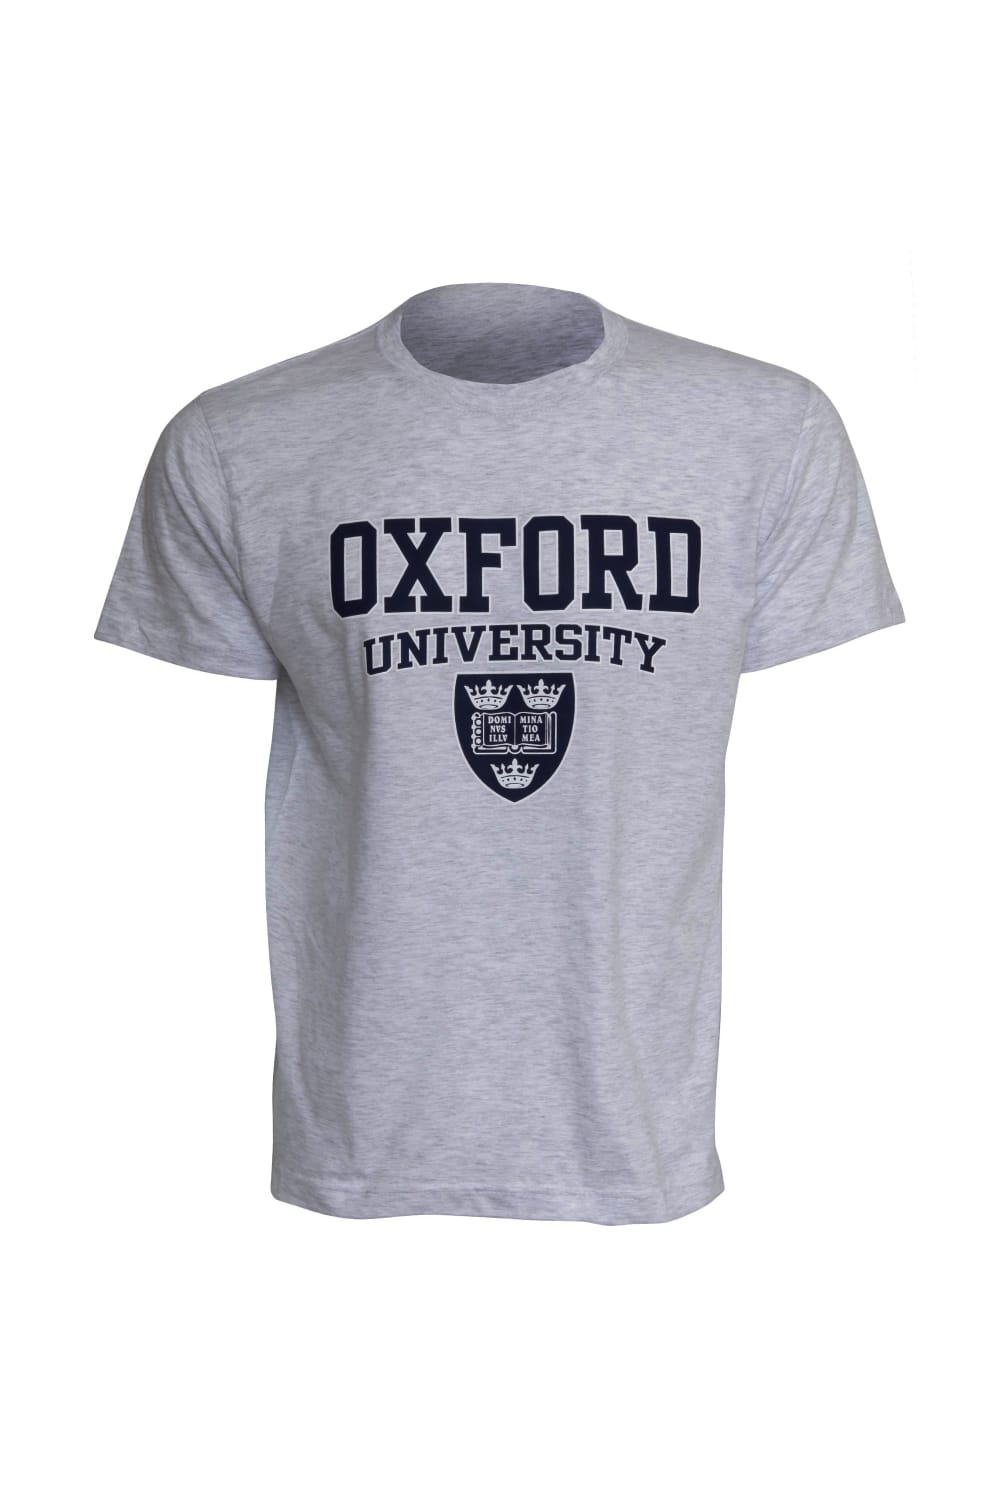 Mens Oxford University Print Short Sleeve T-Shirt (Sport Grey)